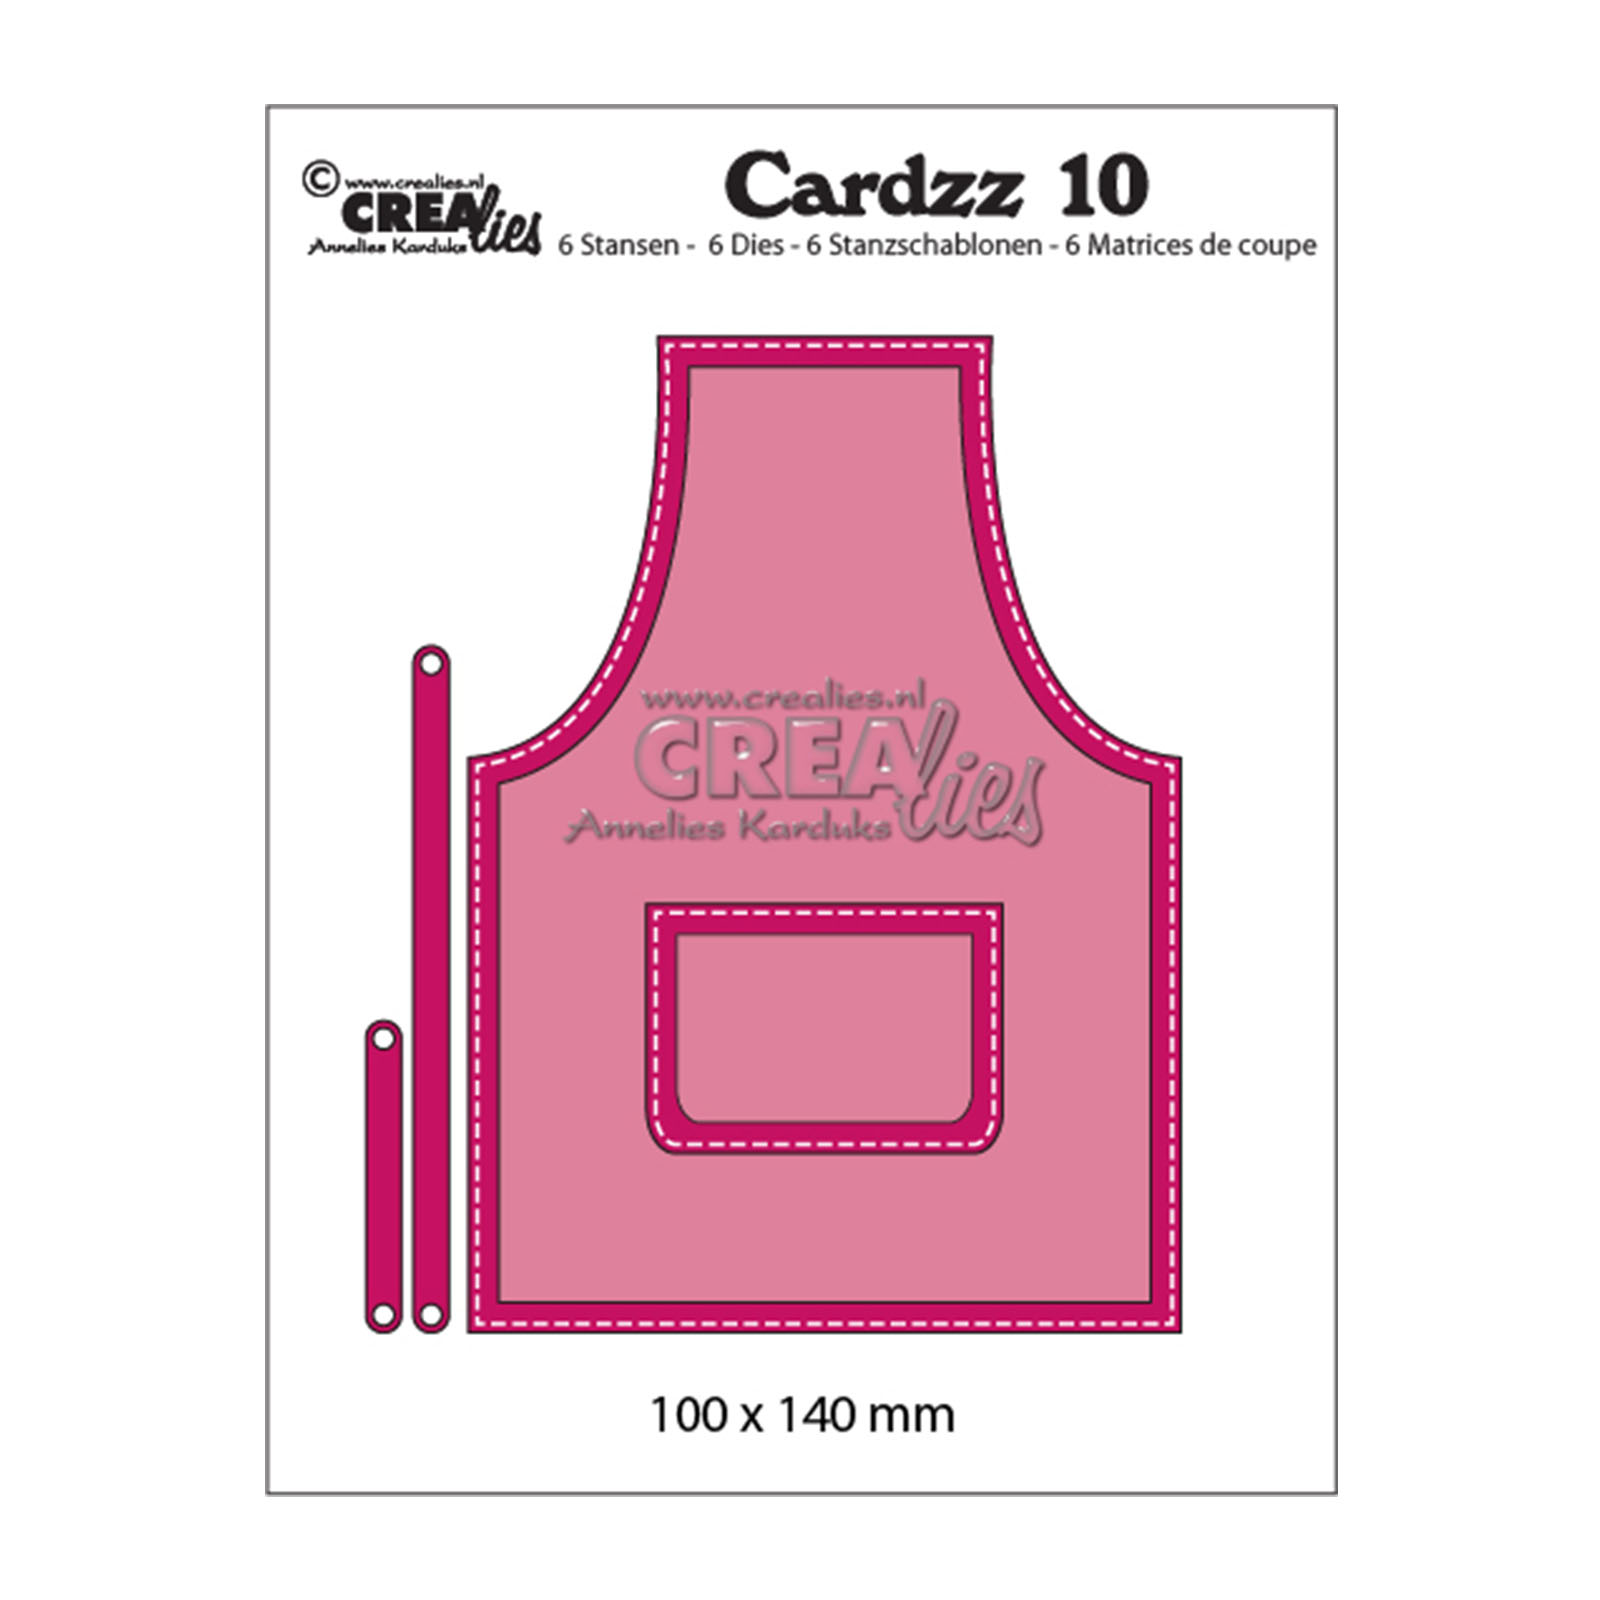 Crealies • Cardzz matrices de découpe no.10 Apron